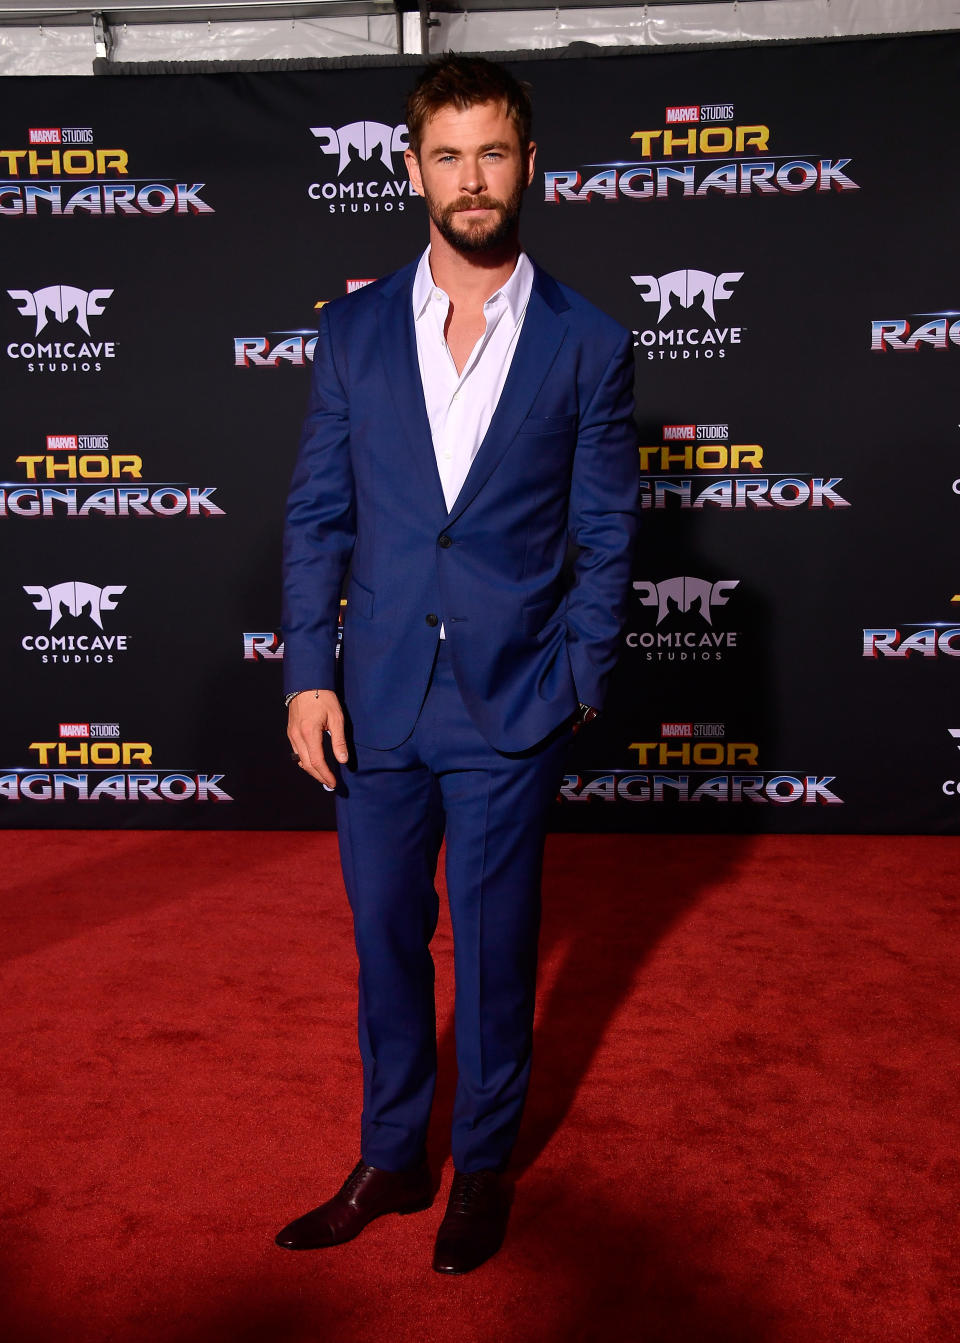 Chris Hemsworth at the ‘Thor: Ragnarok’ premiere